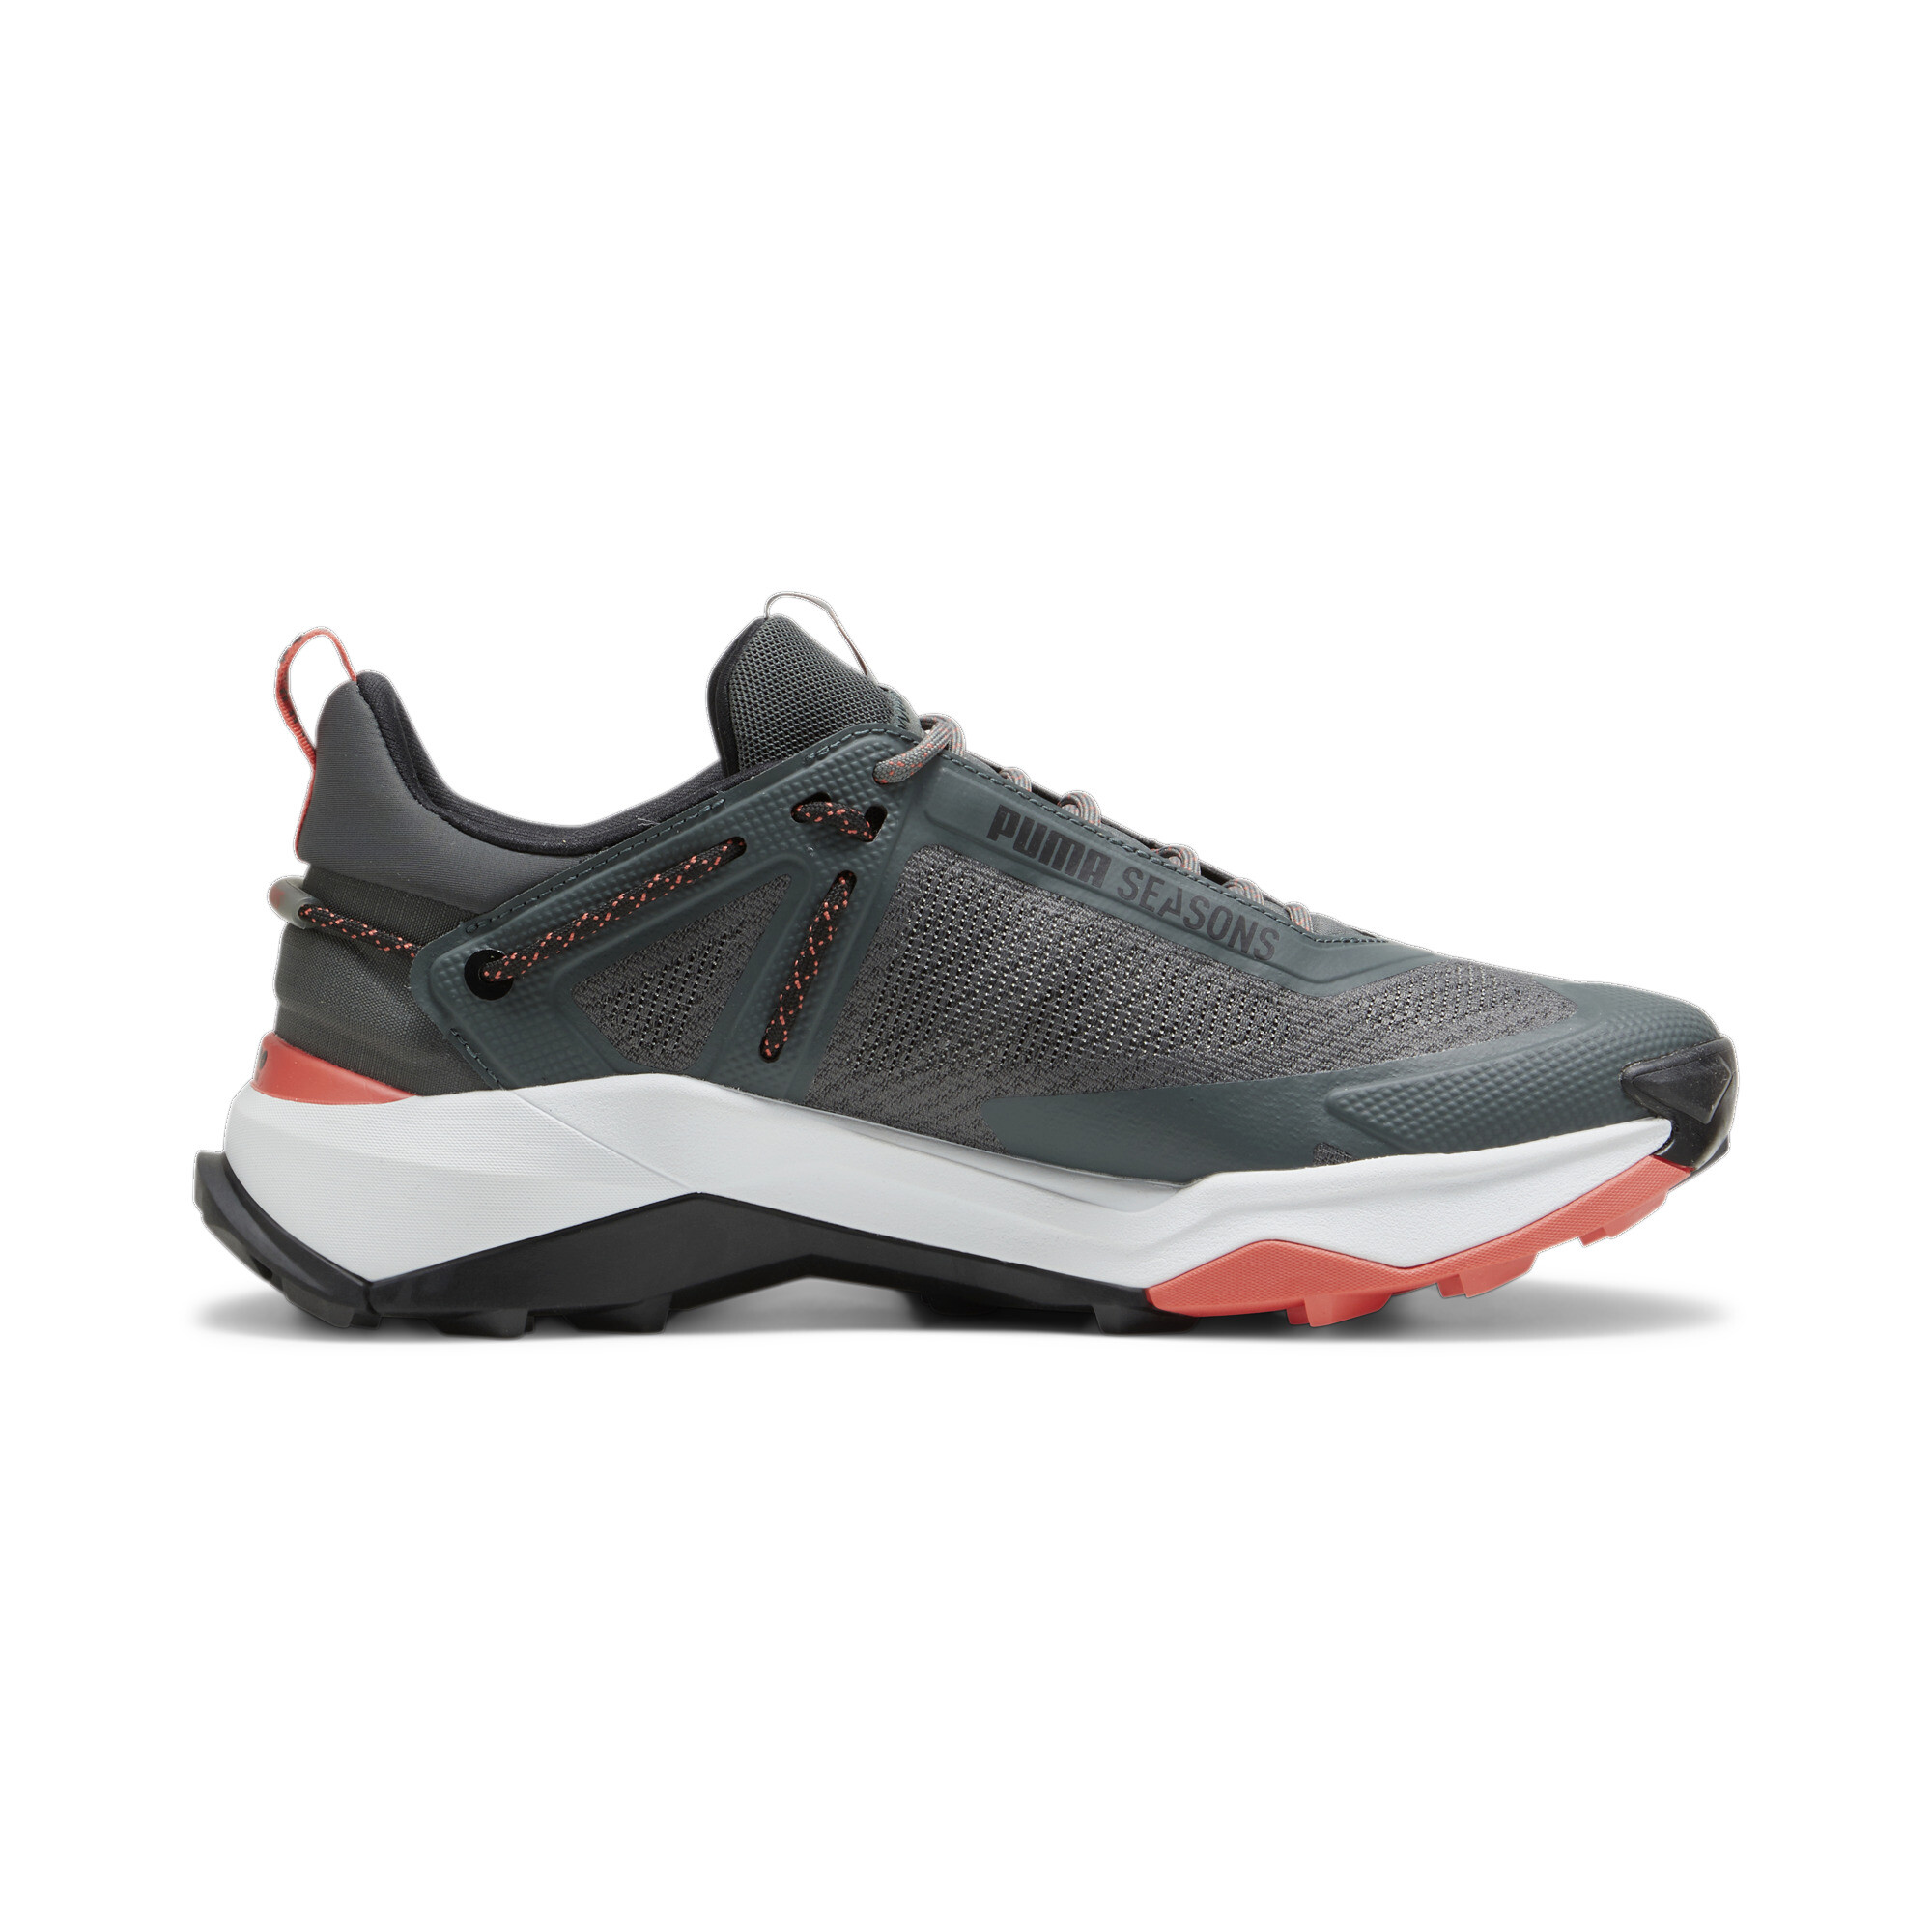 Men's PUMA Explore NITROâ¢ Hiking Shoes In Gray, Size EU 44